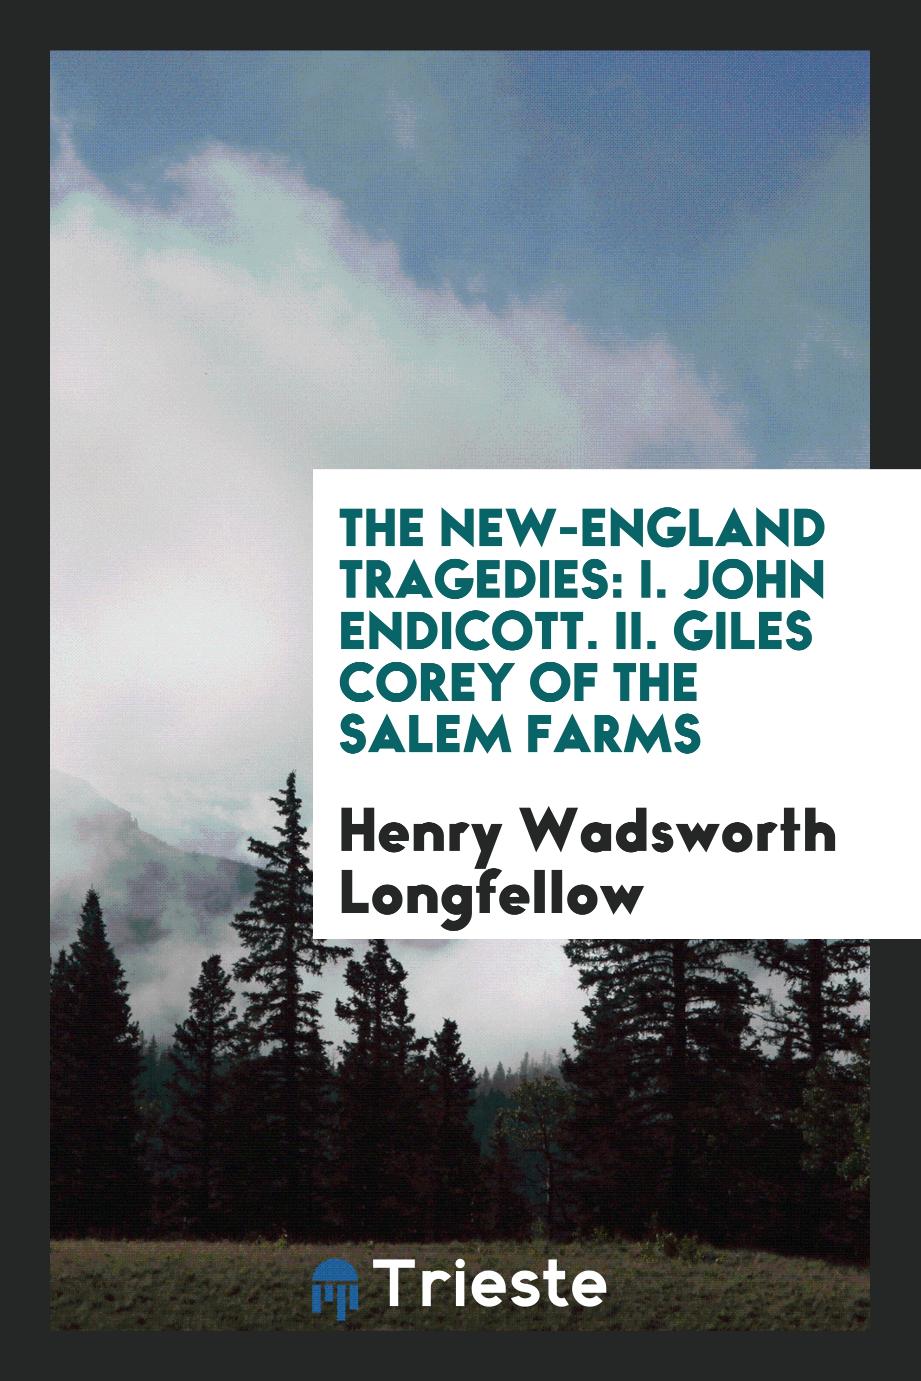 The New-England Tragedies: I. John Endicott. II. Giles Corey of the Salem Farms